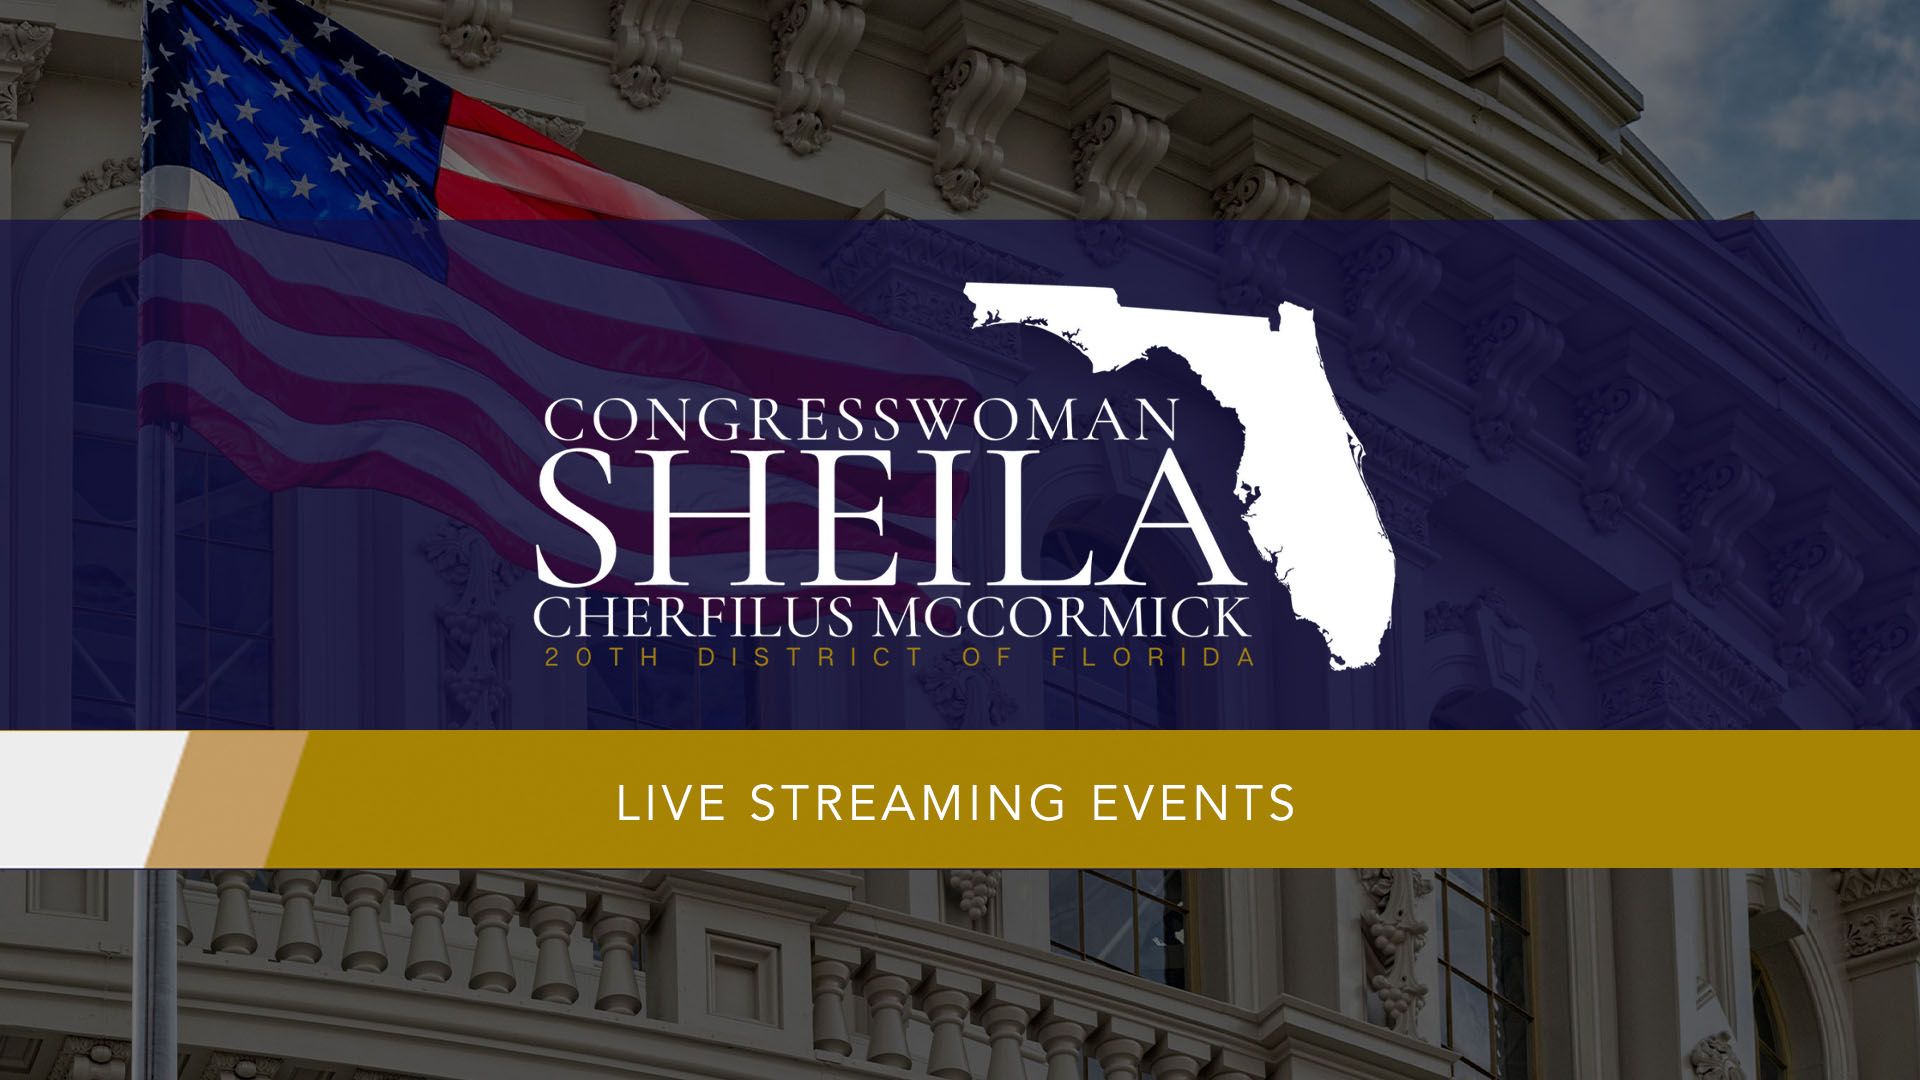 Congresswoman Sheila Cherfilus-Mccormick